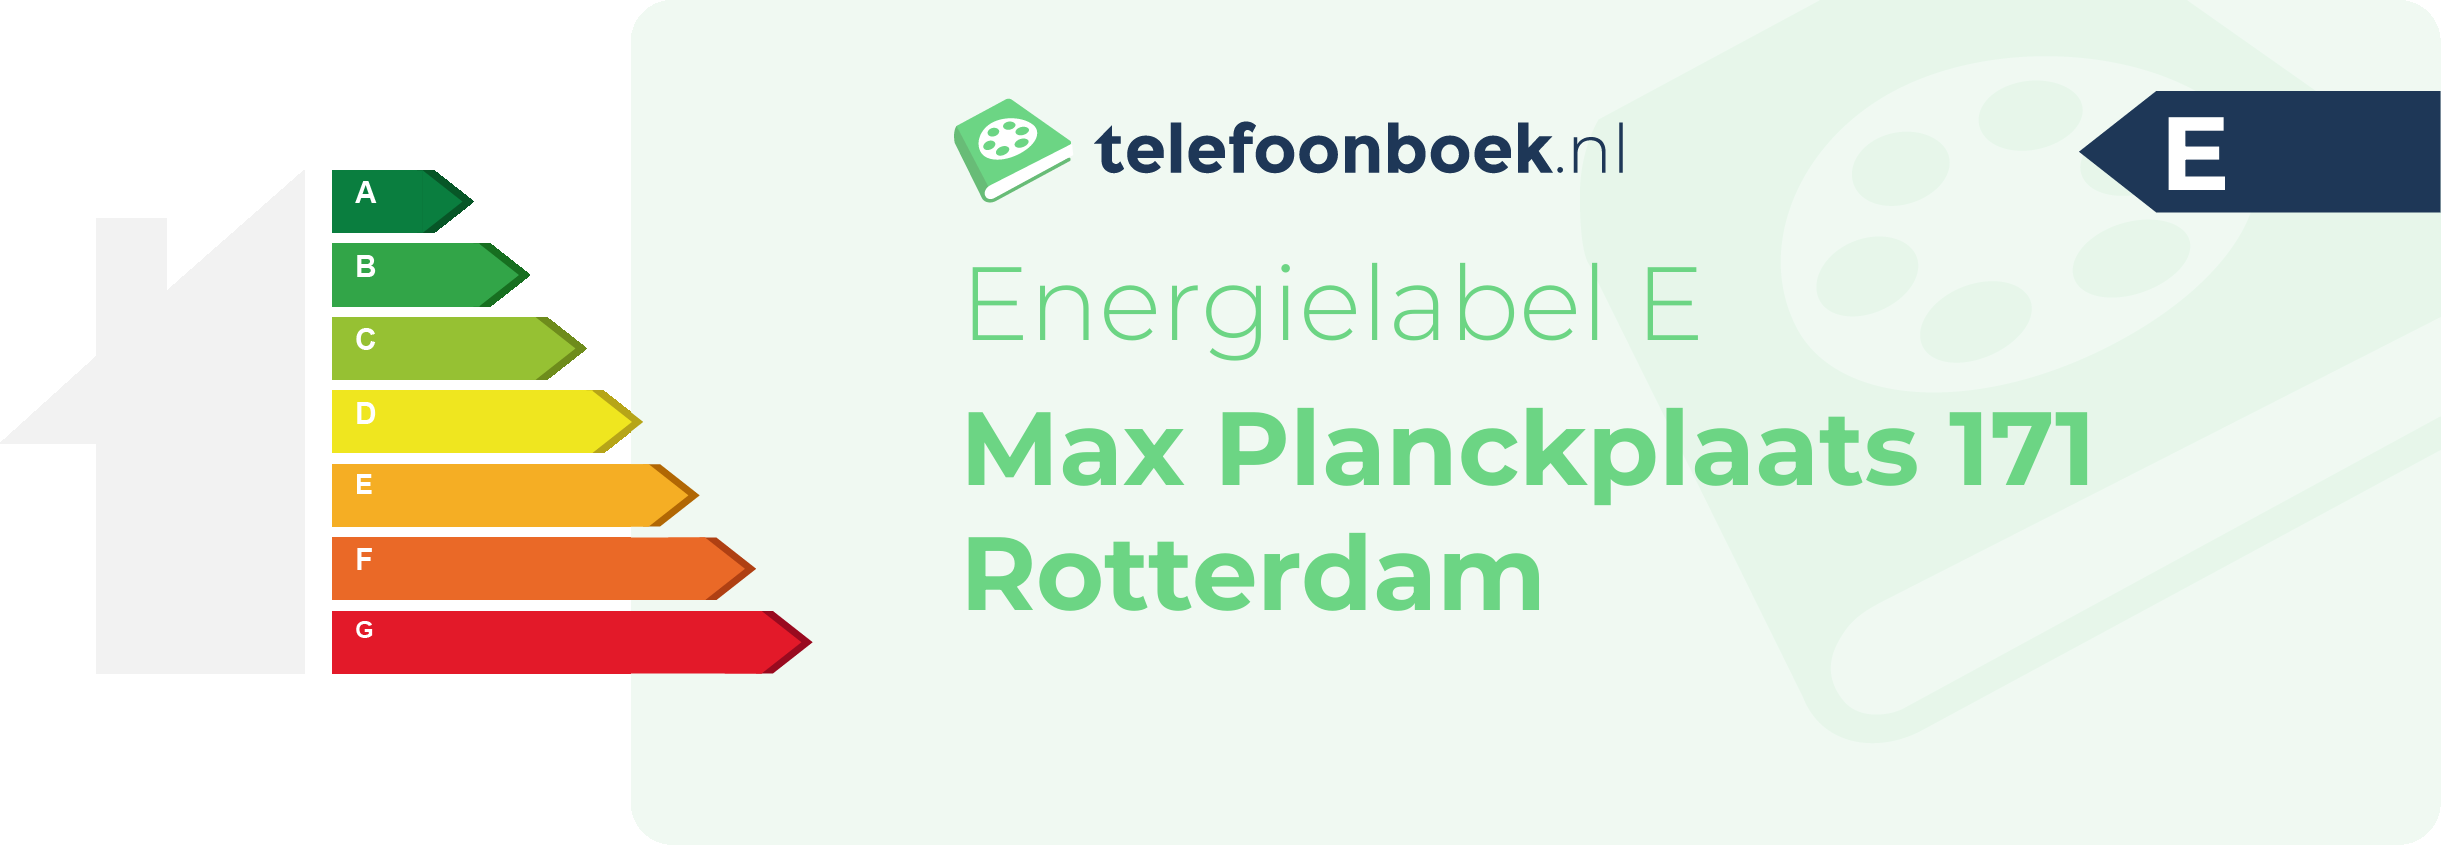 Energielabel Max Planckplaats 171 Rotterdam